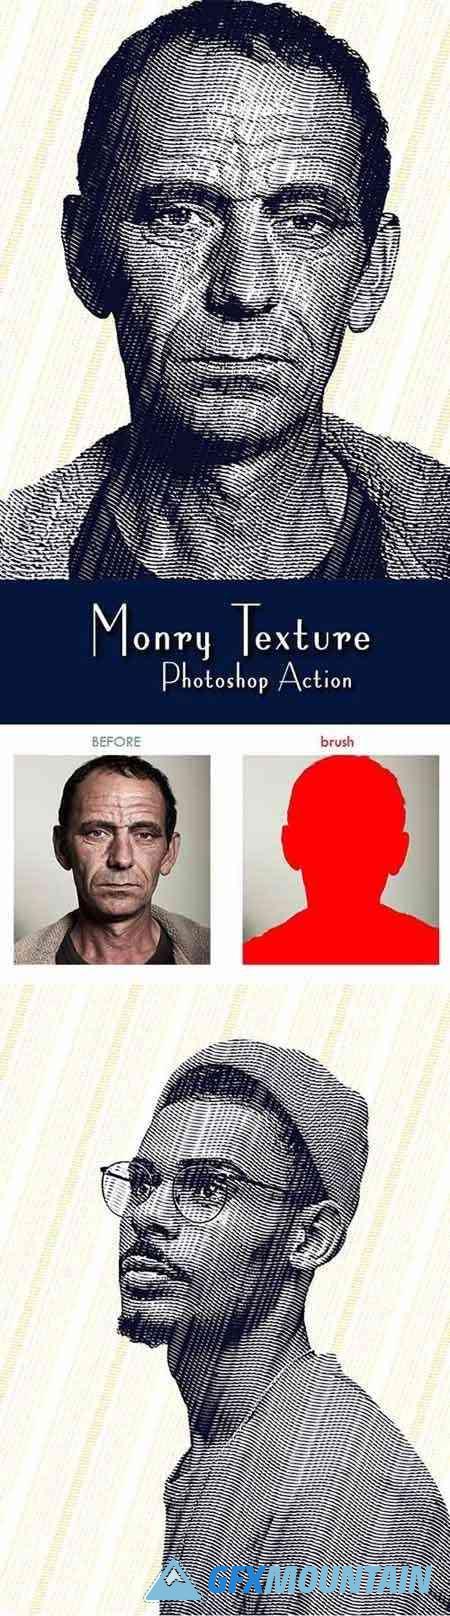 Monry Texture Photoshop Action 31881498